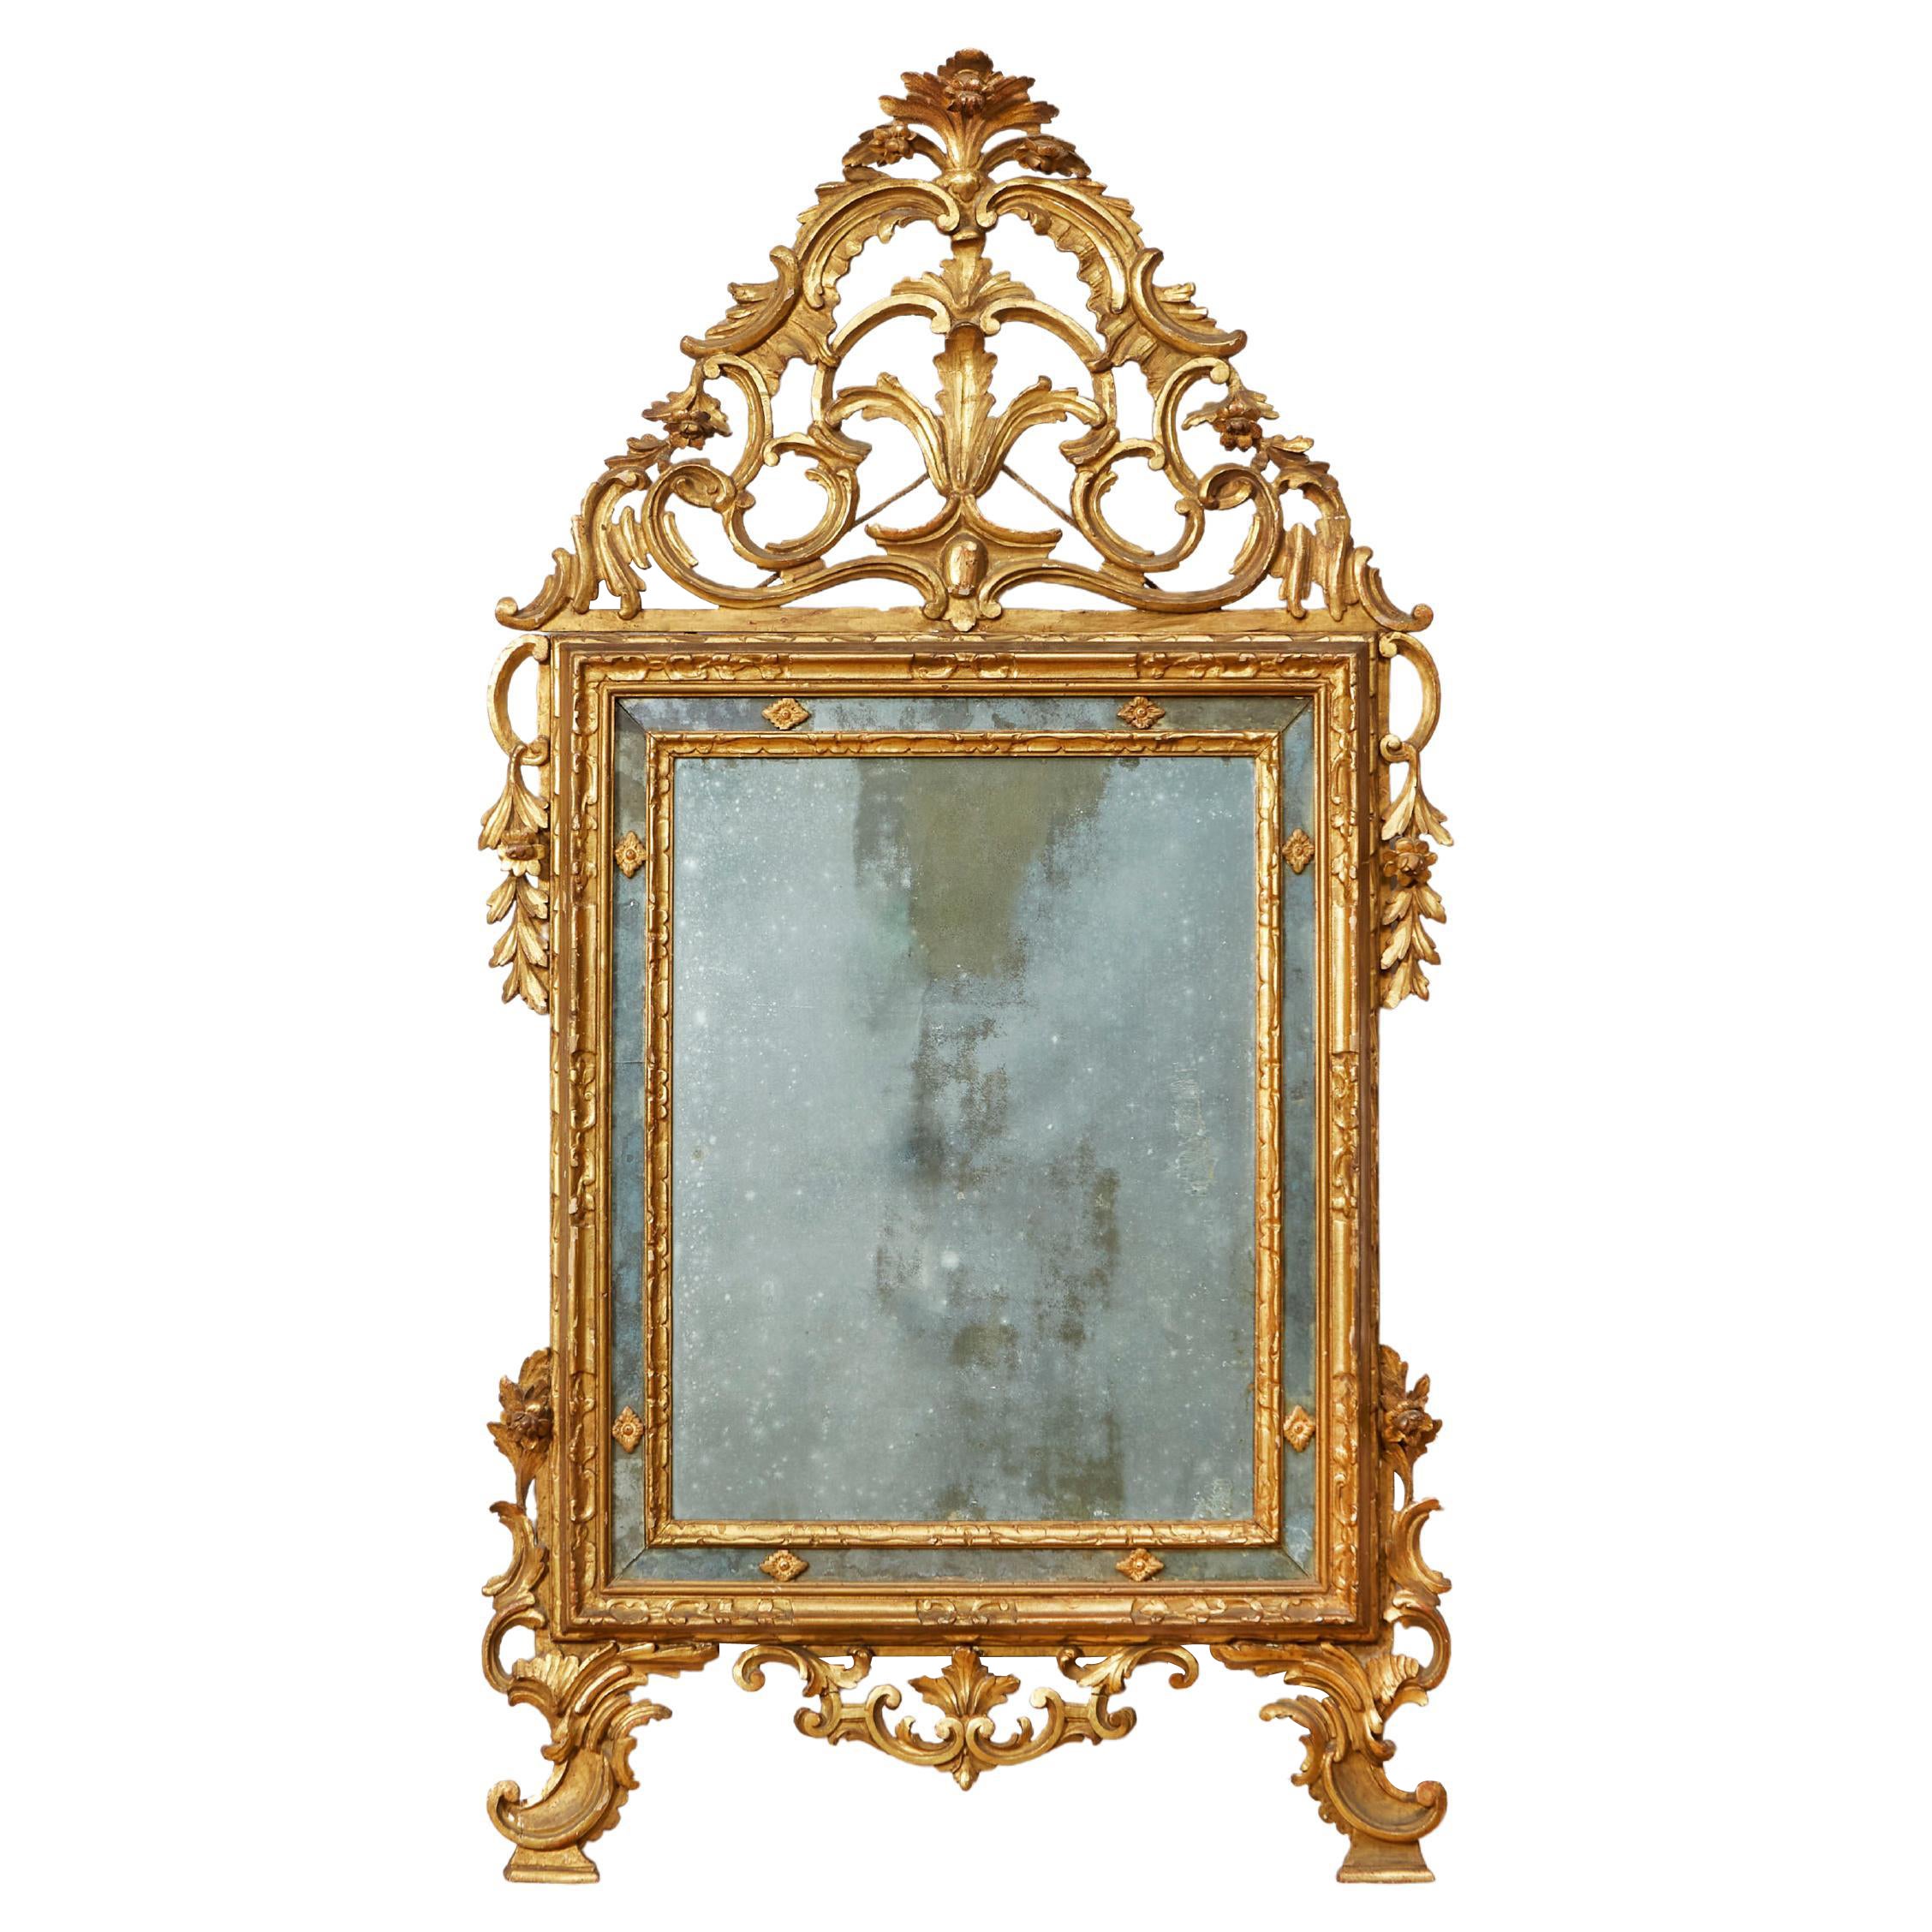 Rococo Revival Wall Mirrors